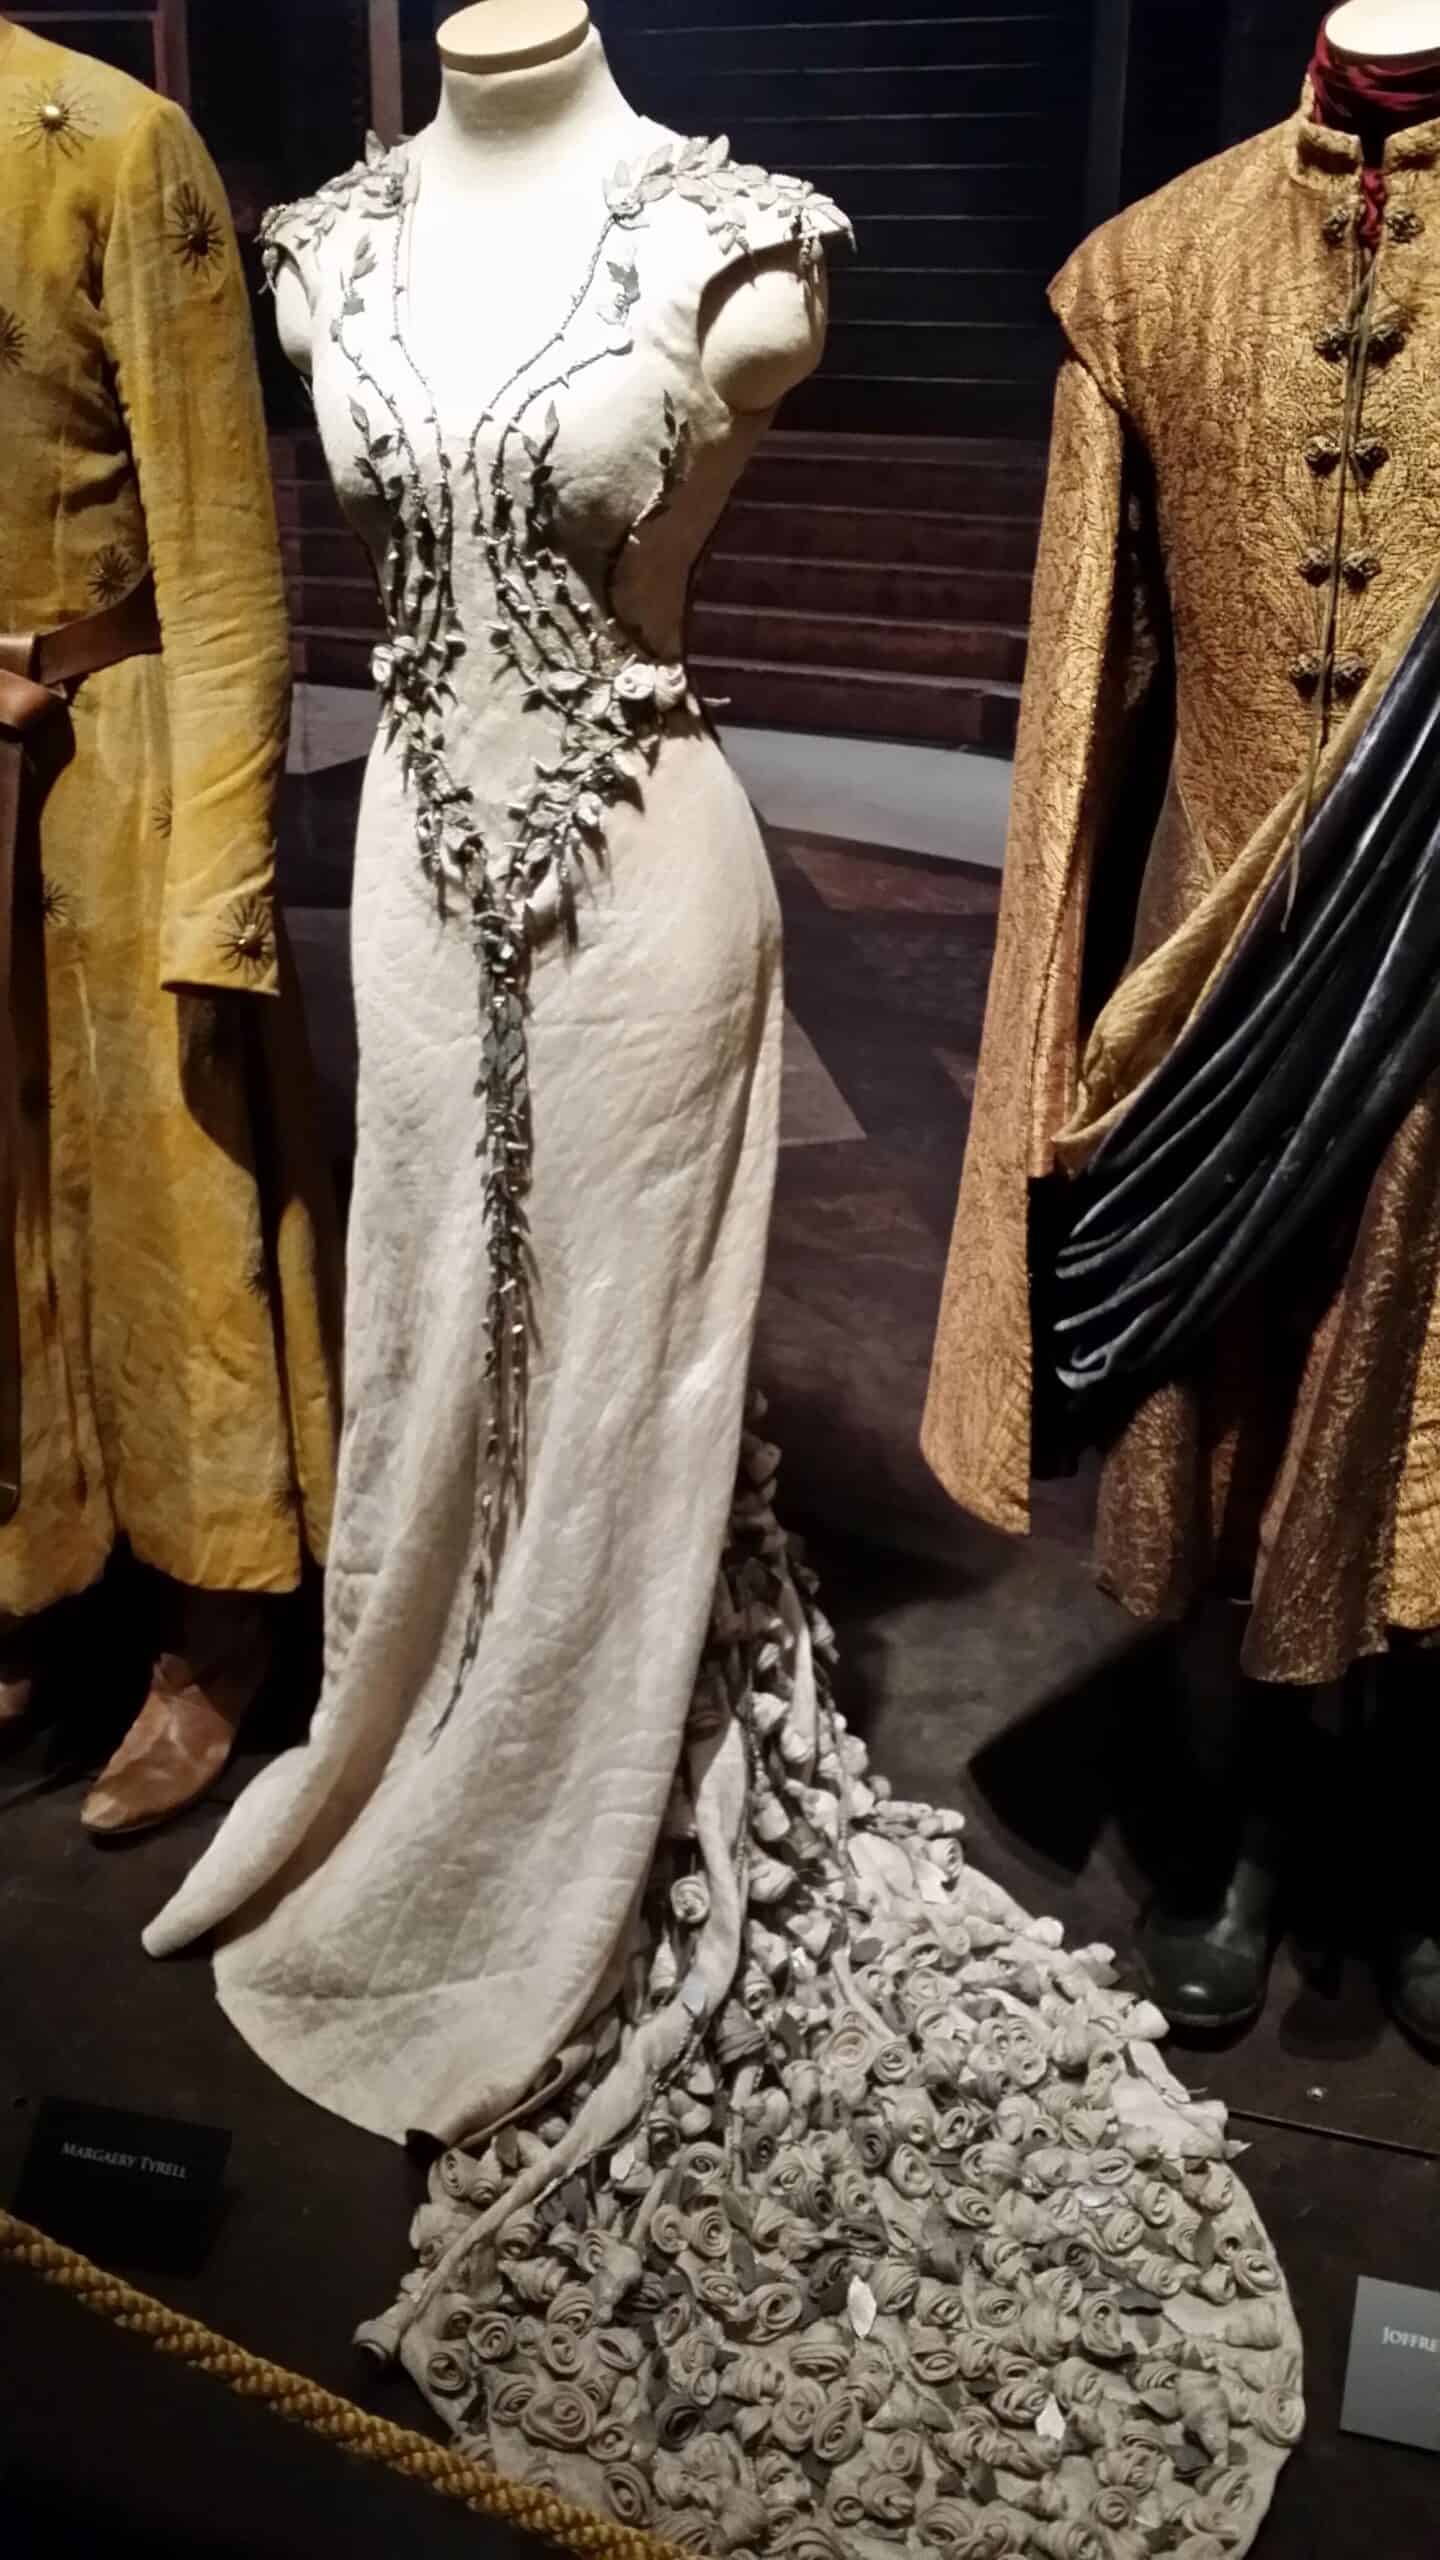 Replica Wedding Dress of Margaery Tyrell